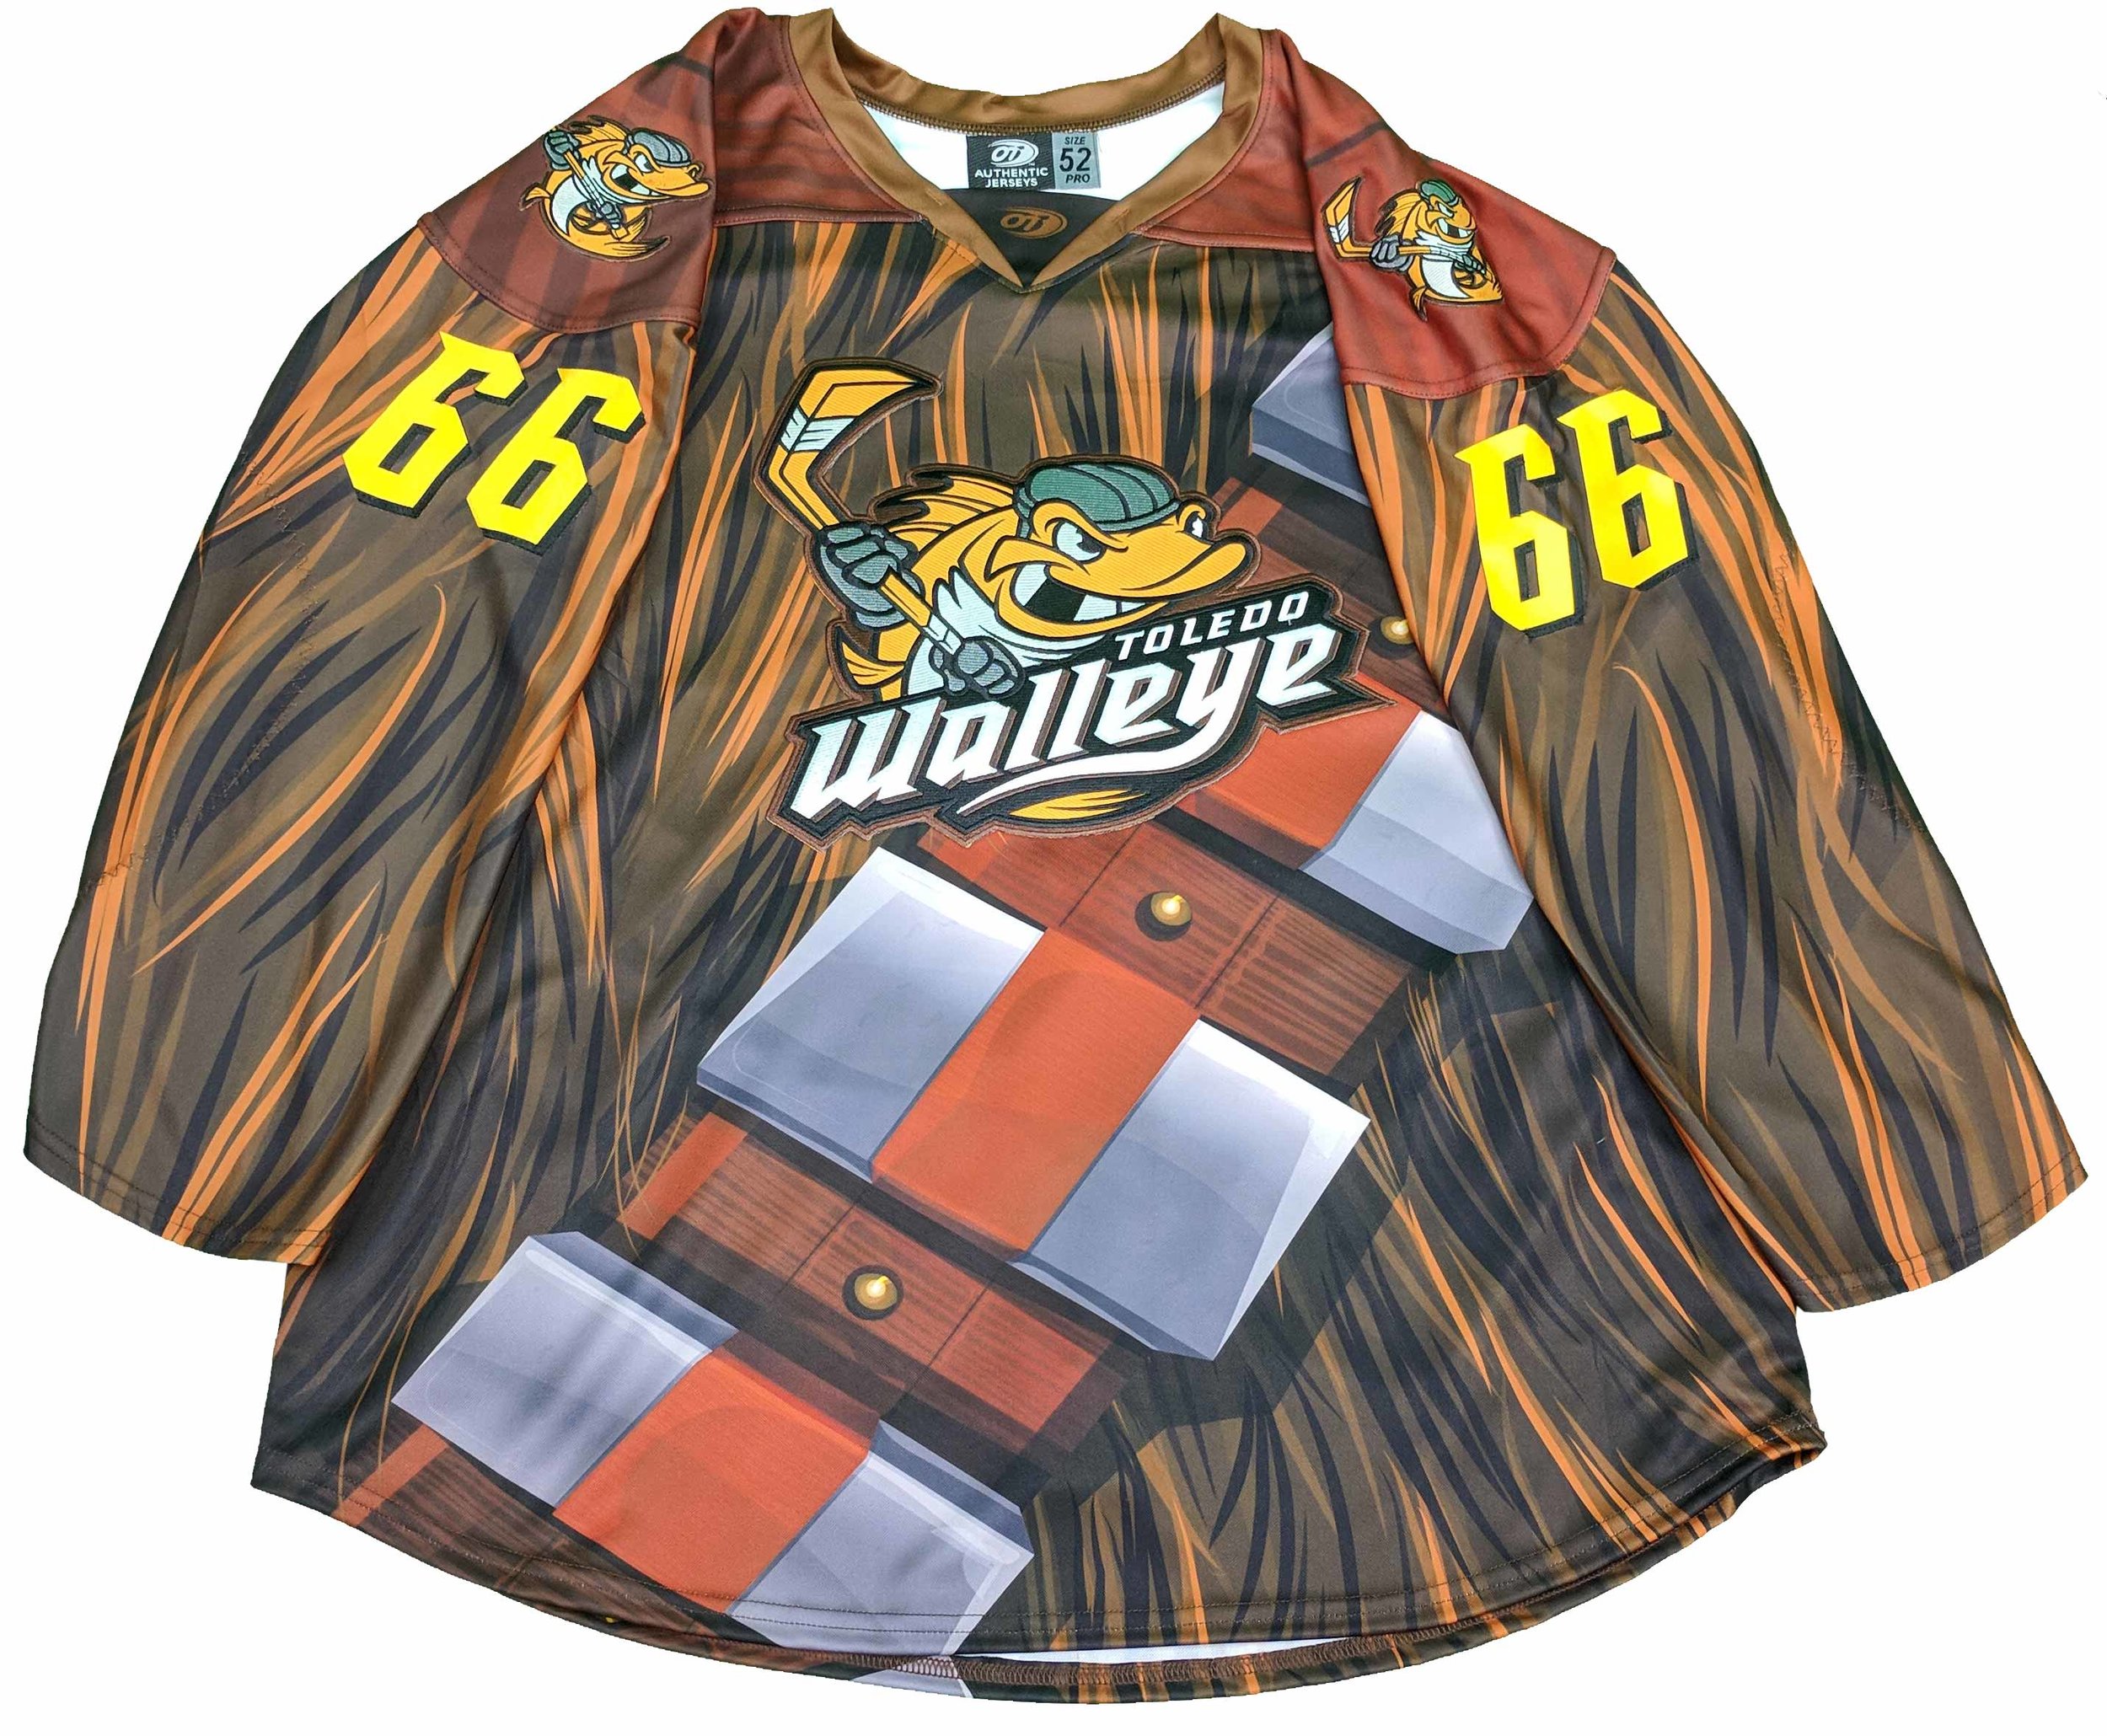 Toledo Walleye - Mix it up with Walleye baseball jerseys